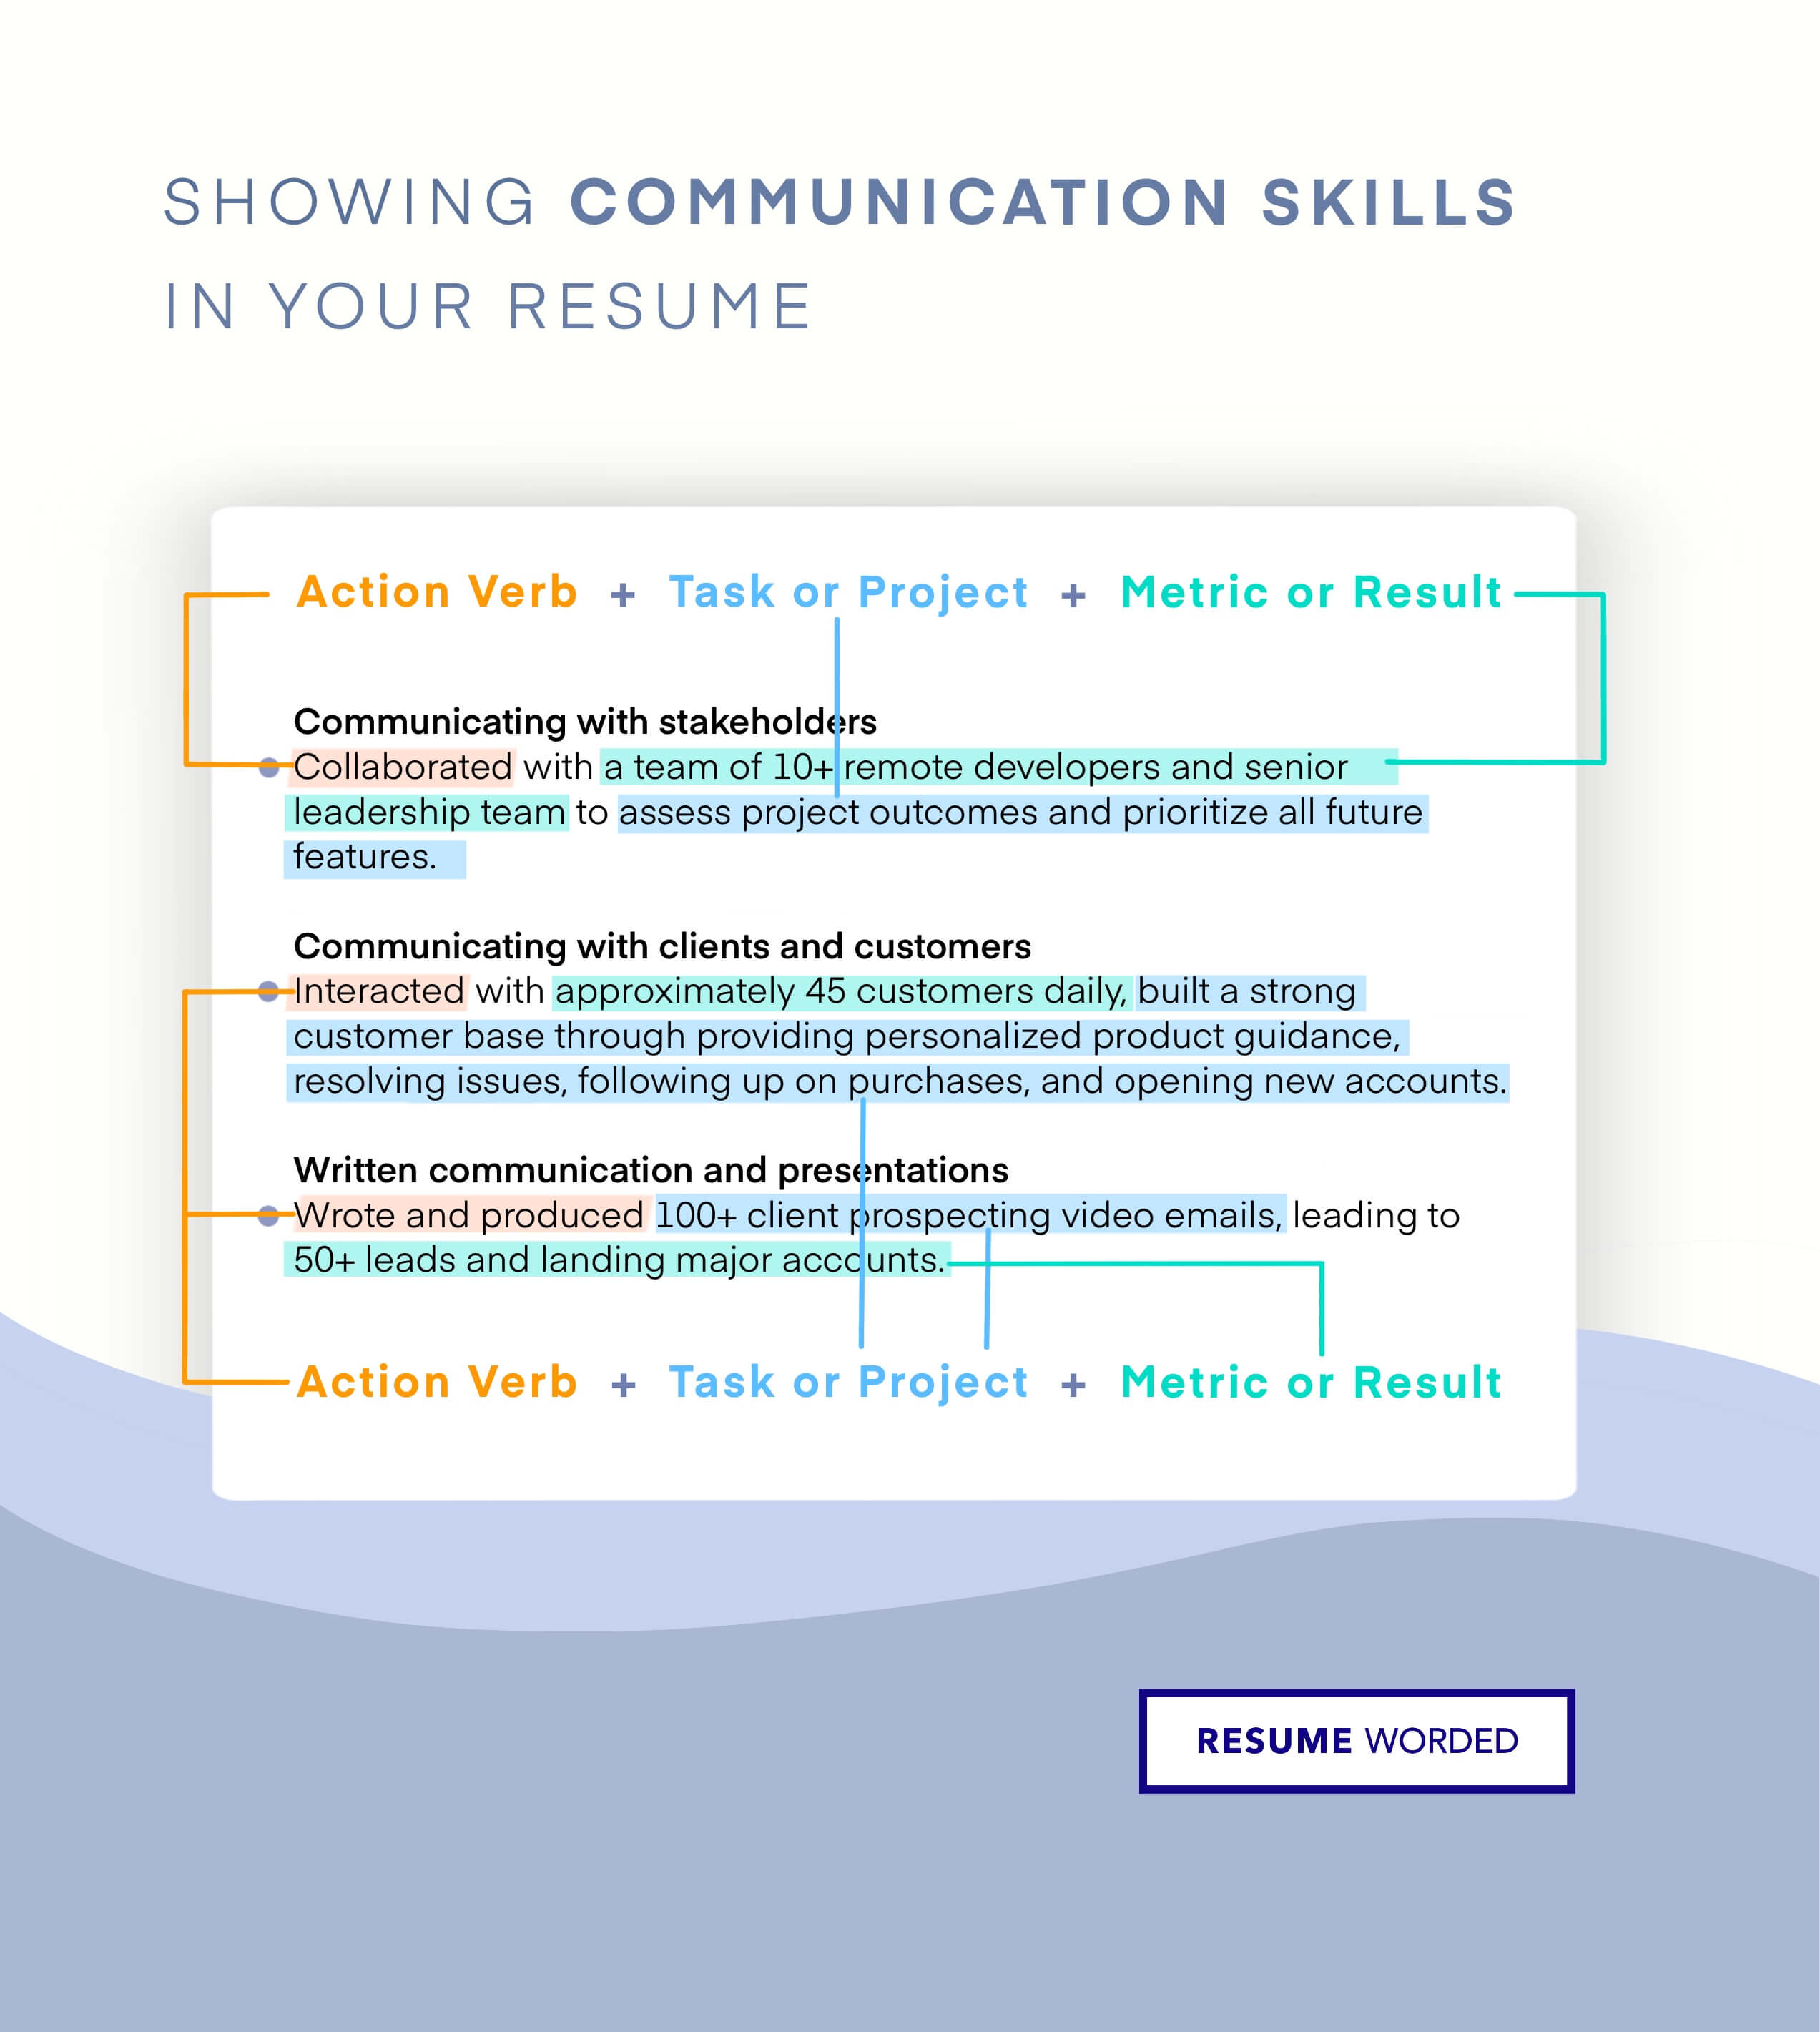 Show your crisis communication skills - Press Secretary CV